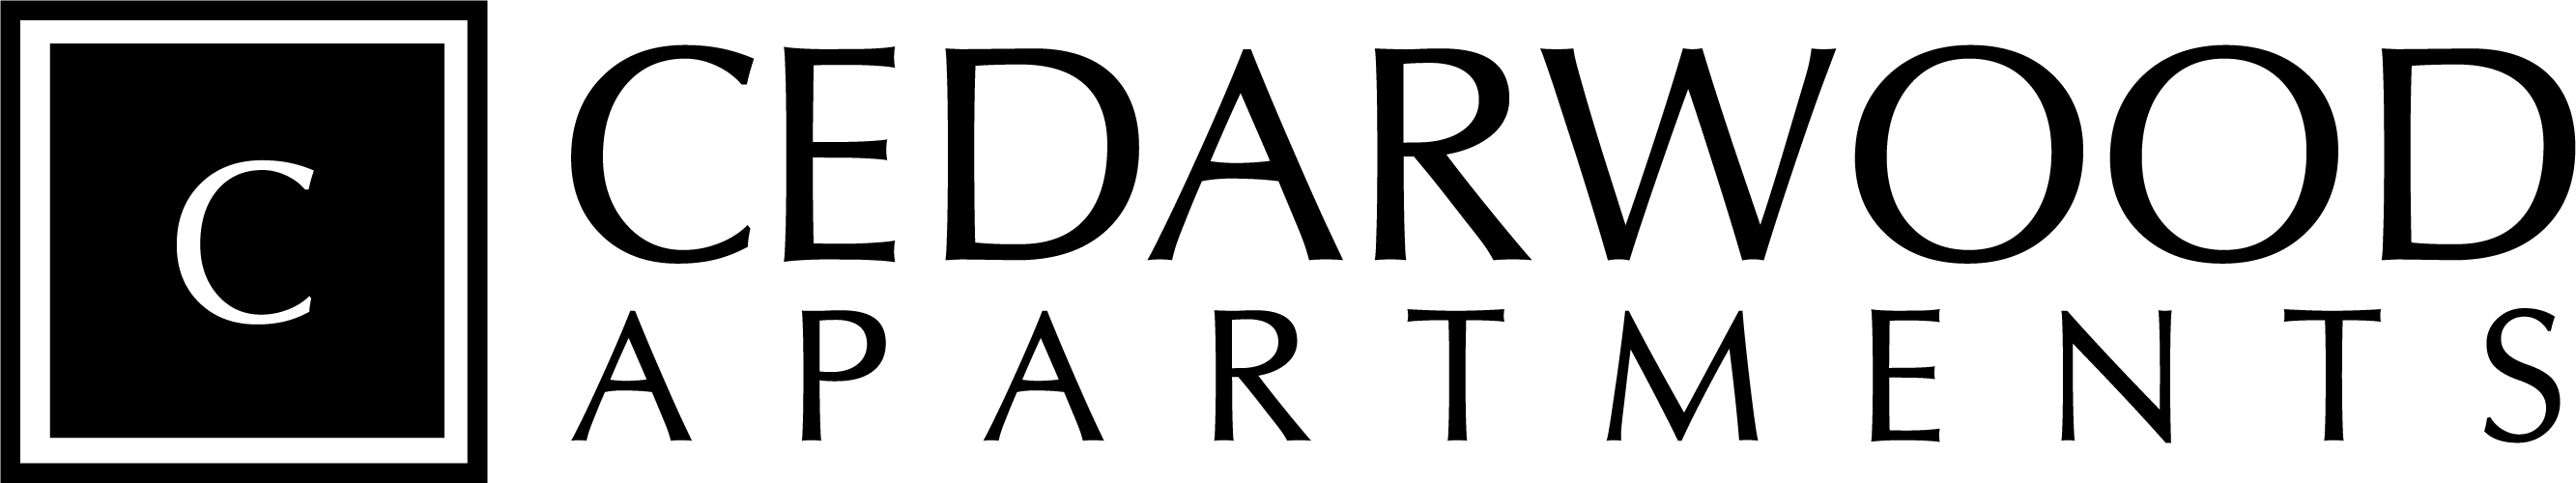 Cedarwood Logo